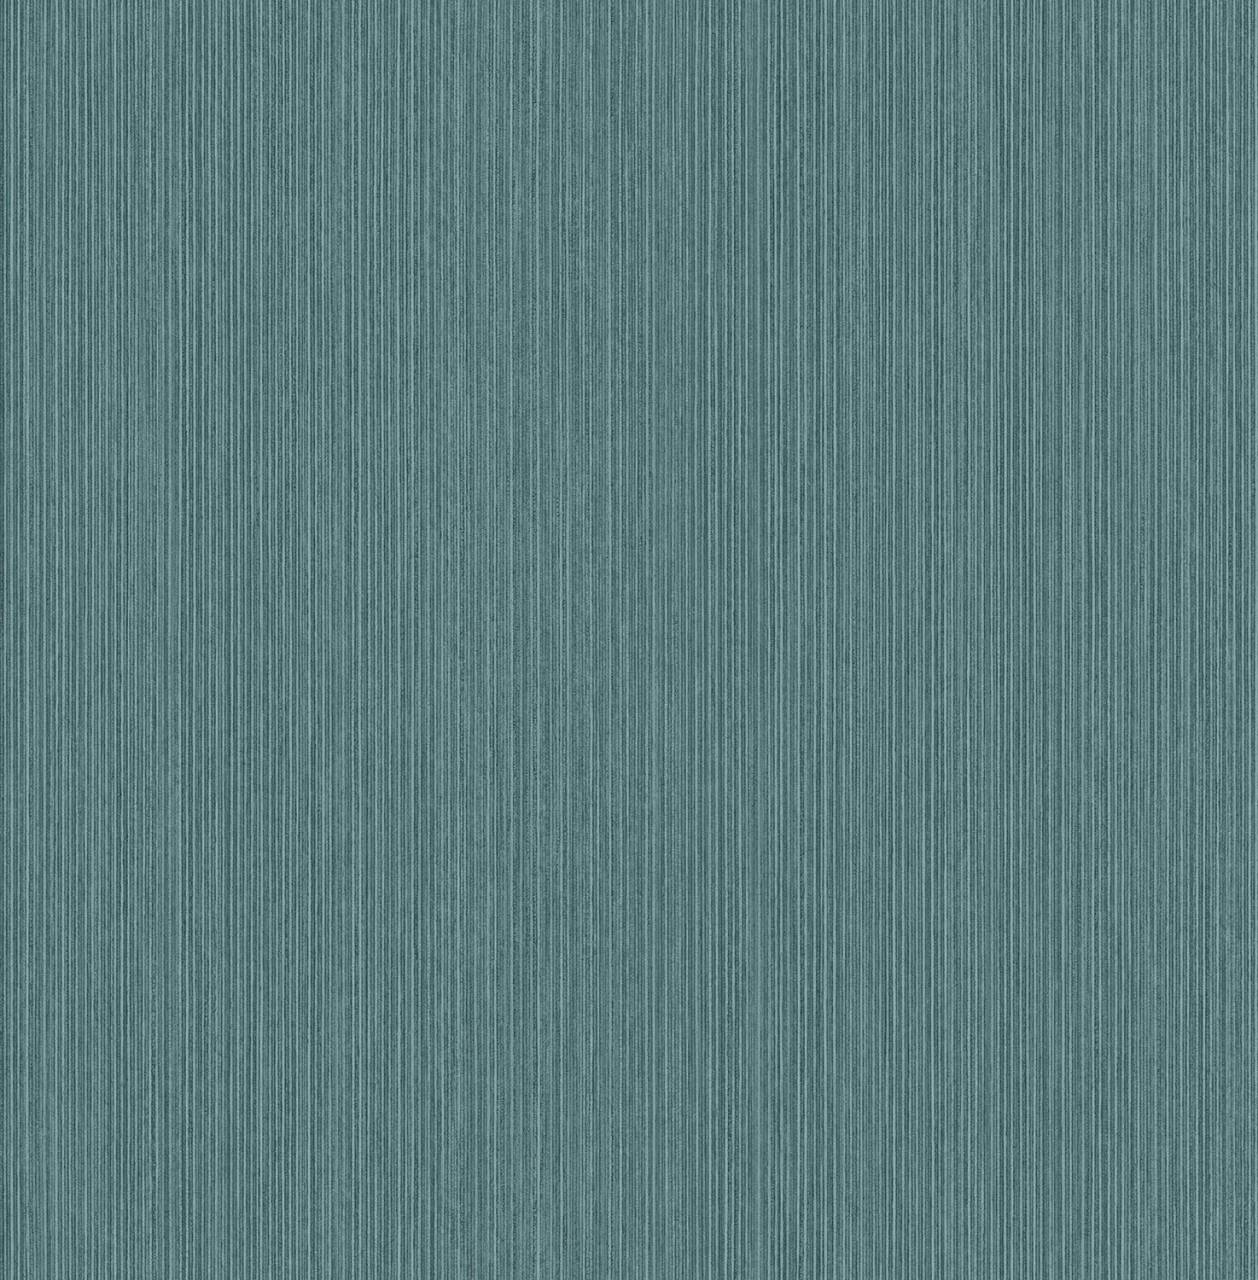 Rasch Textil Non-Woven Wallpaper - Architecture 025336 / 02533-6